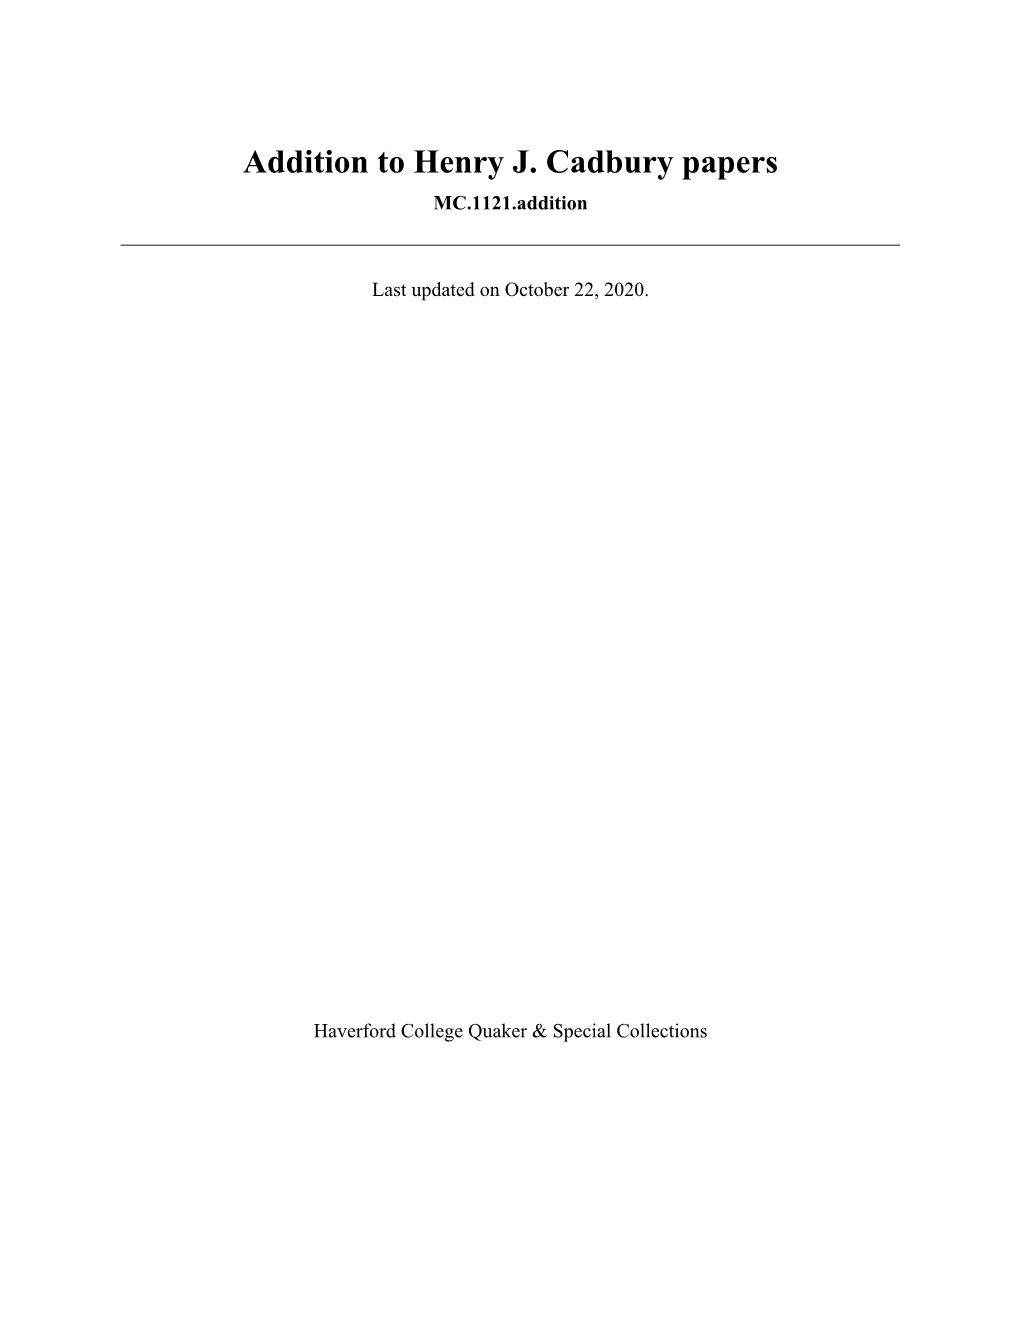 Addition to Henry J. Cadbury Papers MC.1121.Addition